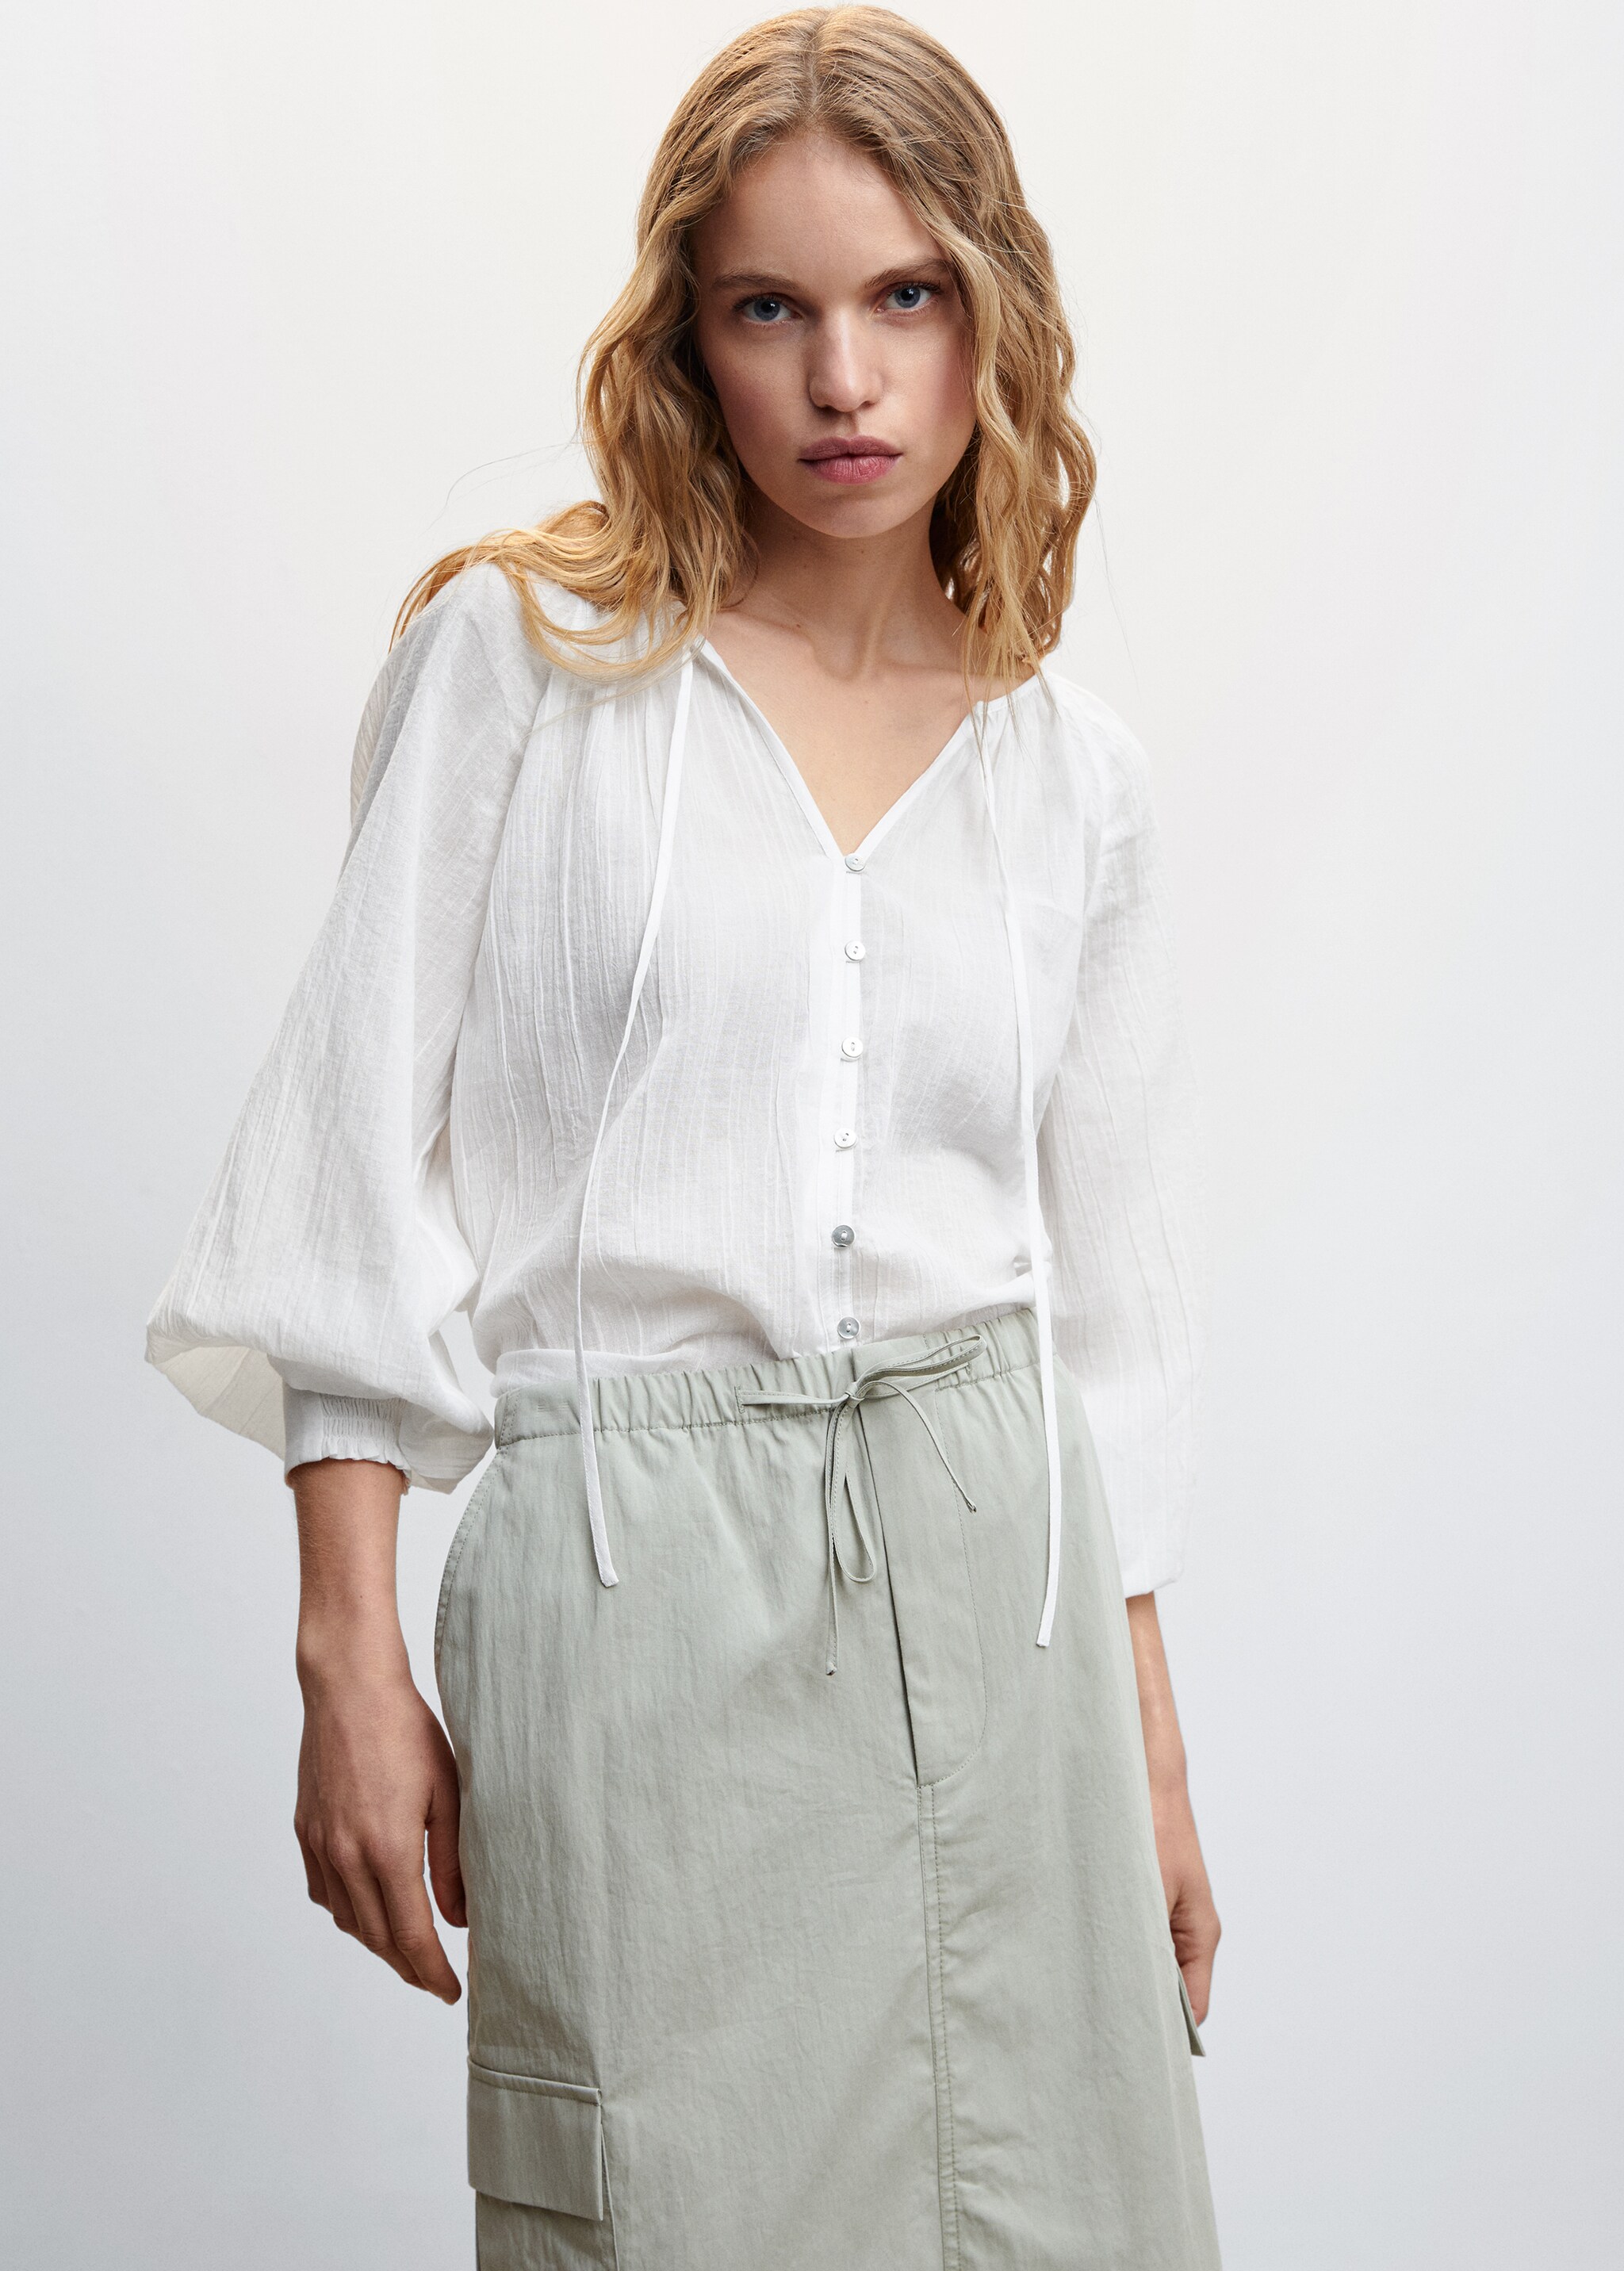 Buttoned textured blouse - Medium plane